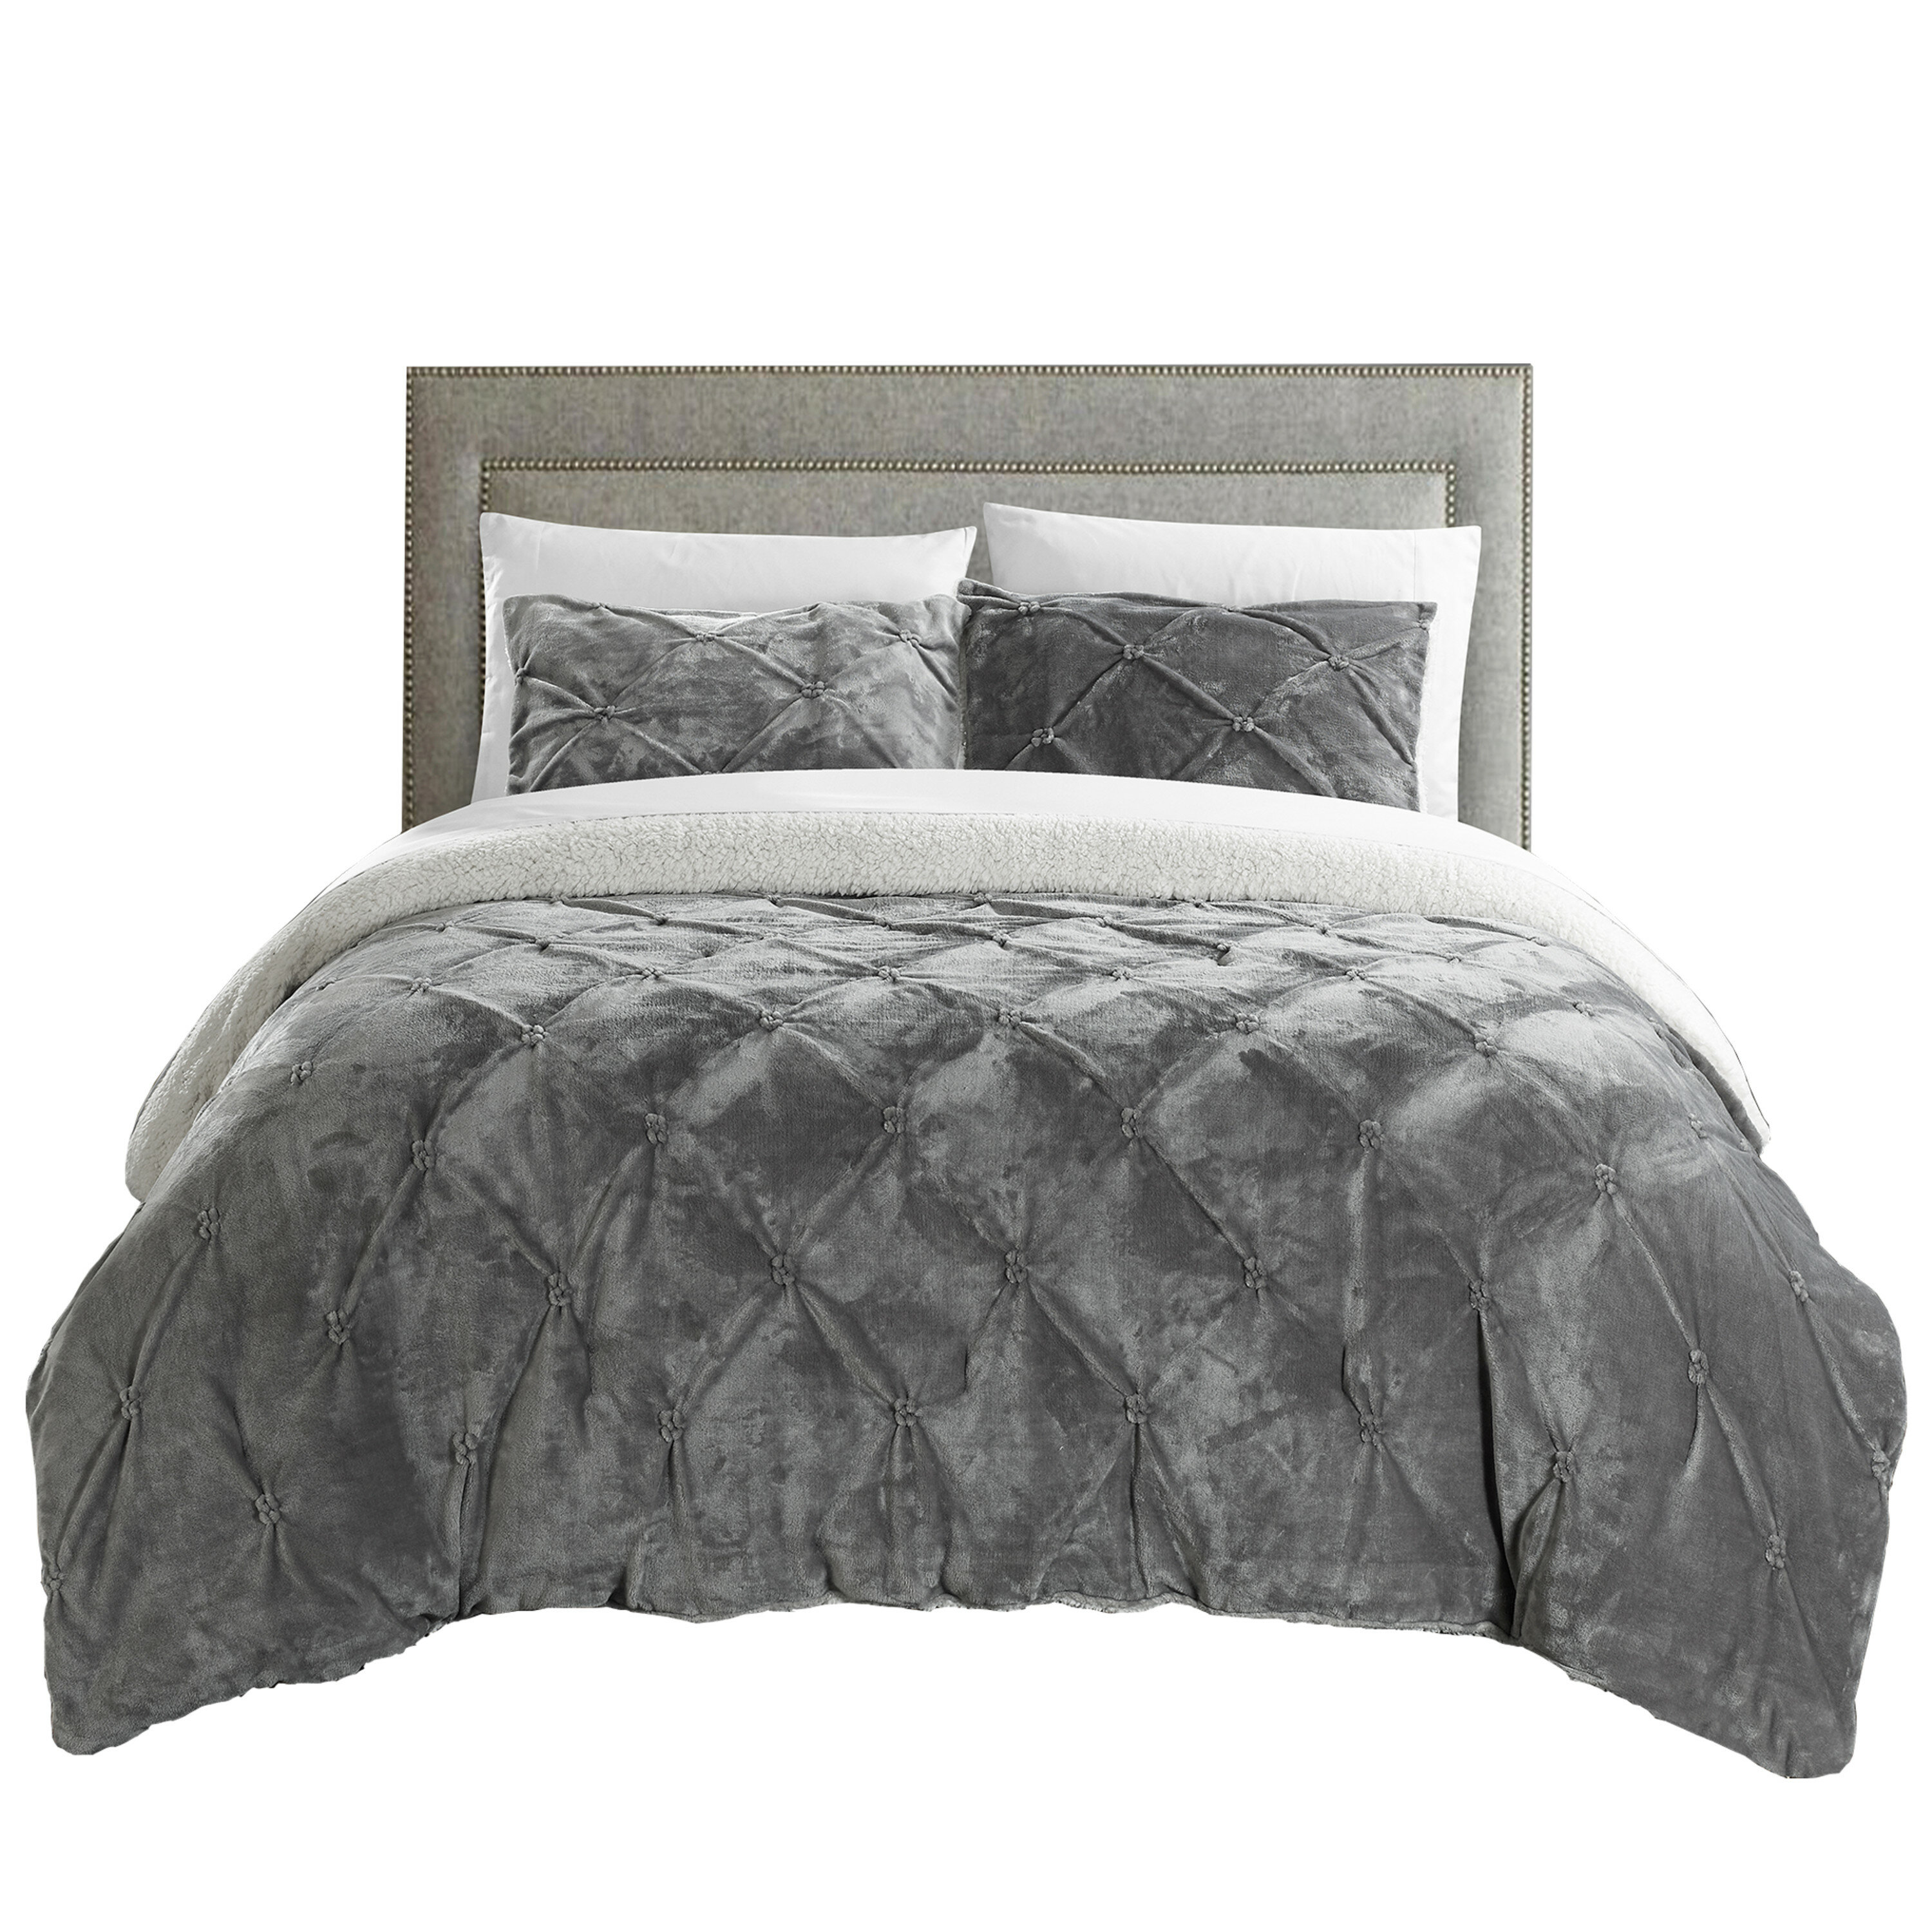 soft gray comforter twin xl